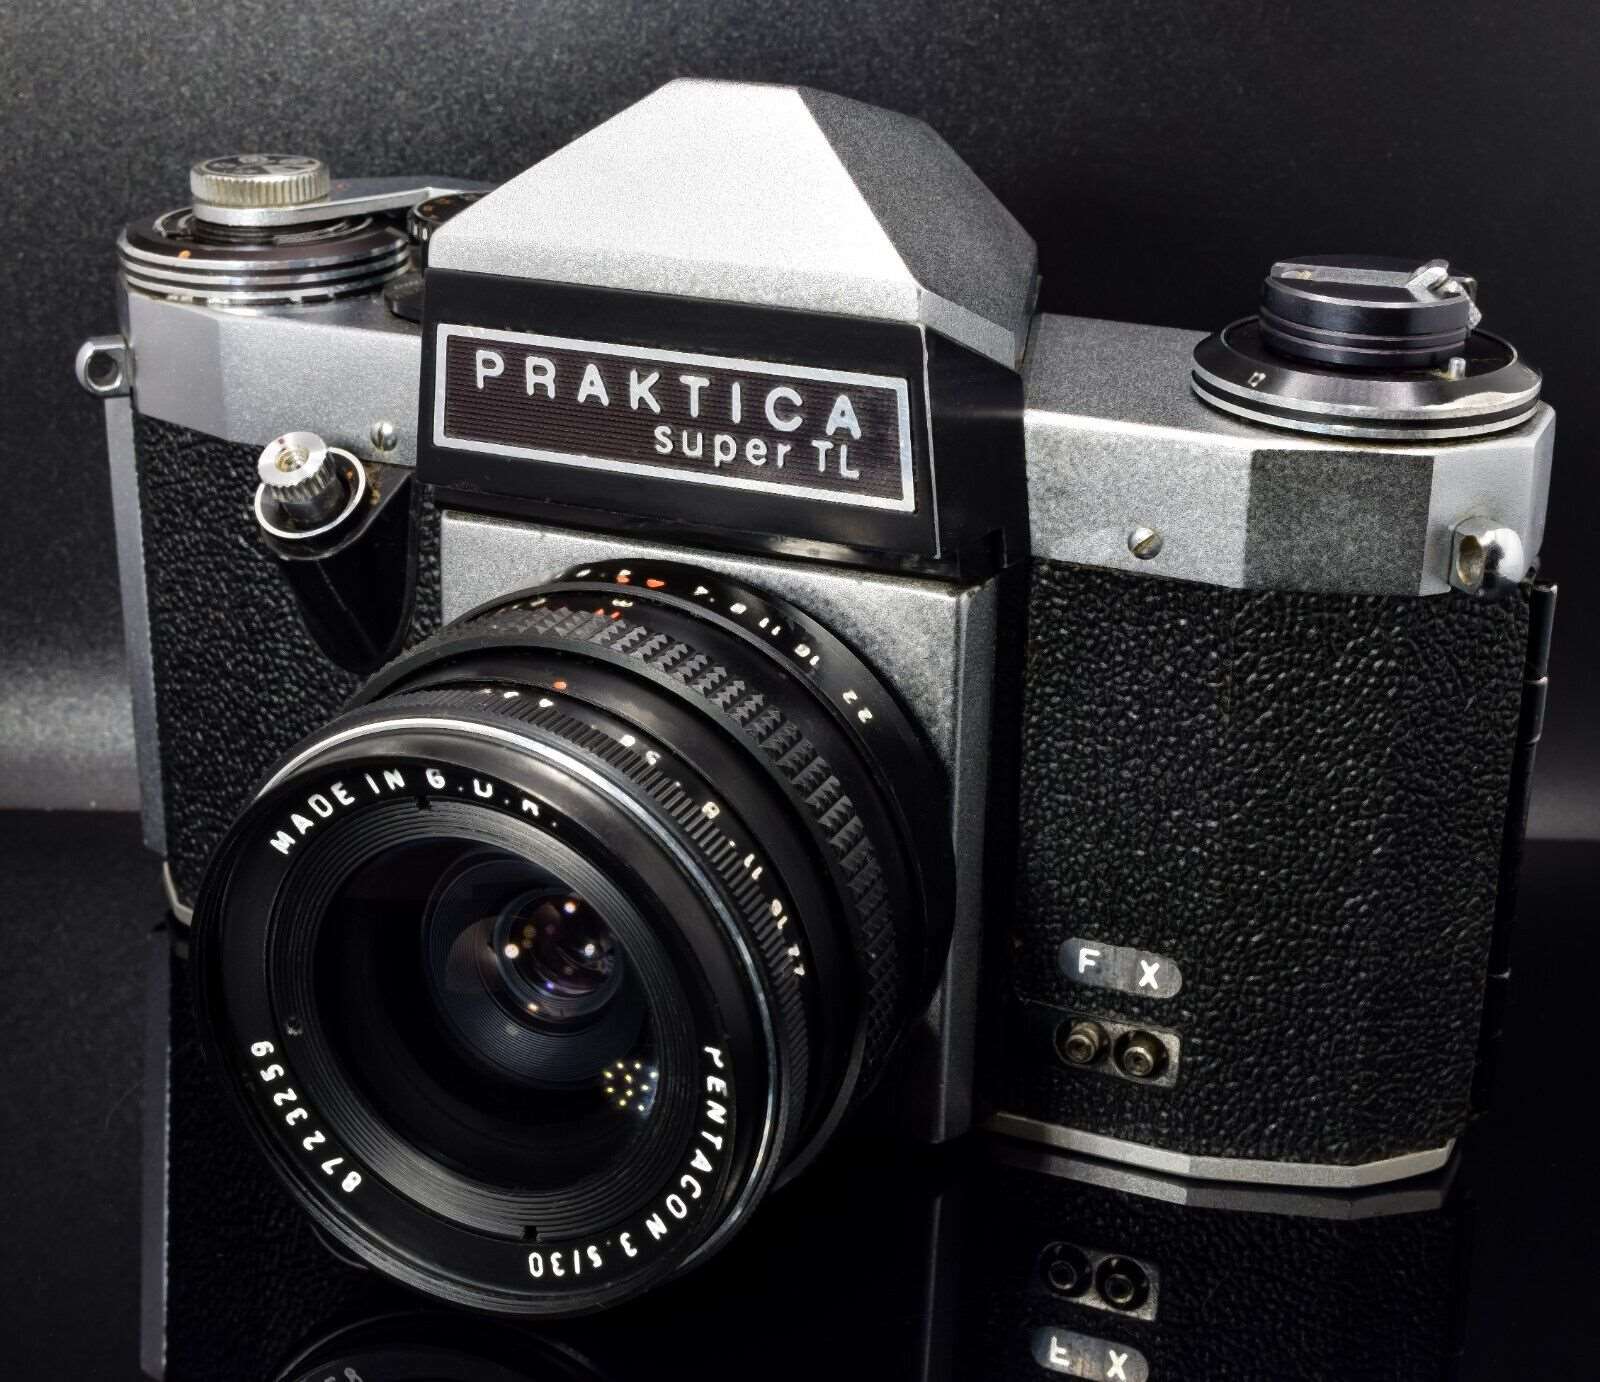 PRAKTICA super TL Black Silver 35mm Film Camera with Pentacon f3.5 